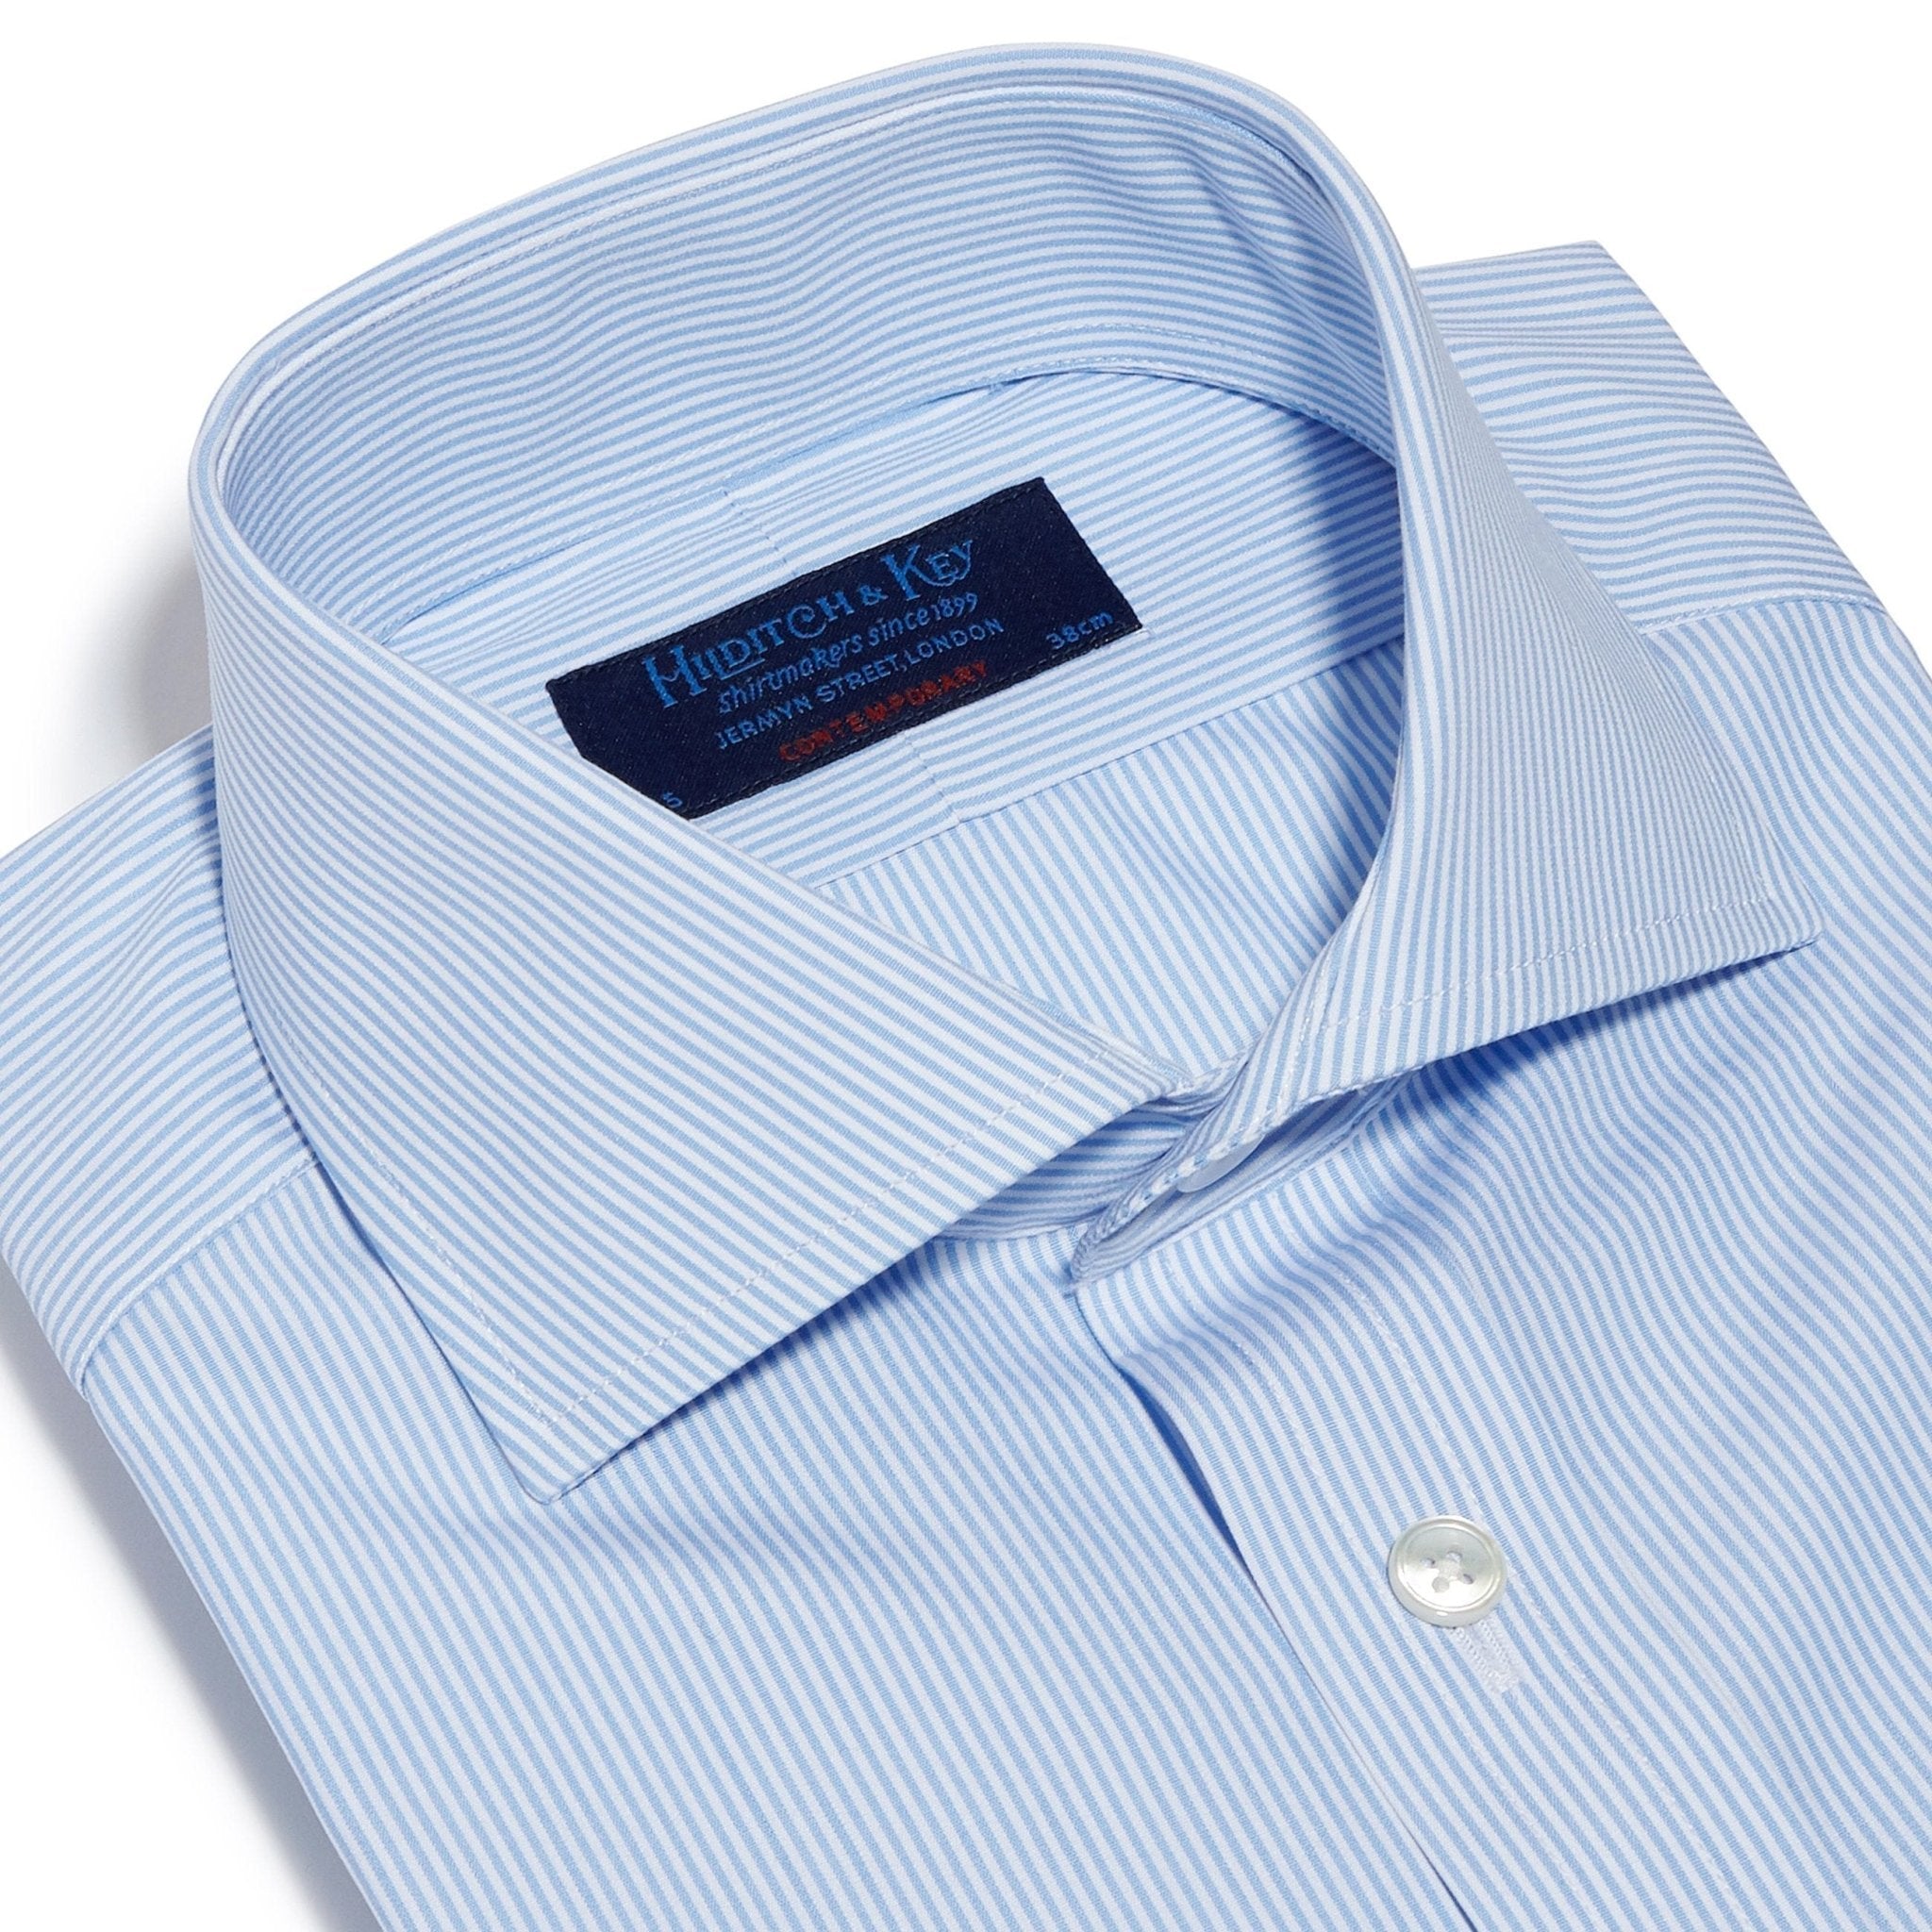 Contemporary Fit, Cut-away Collar, Double Cuff Shirt in a Blue & White Fine Bengal Poplin Cotton - Hilditch & Key